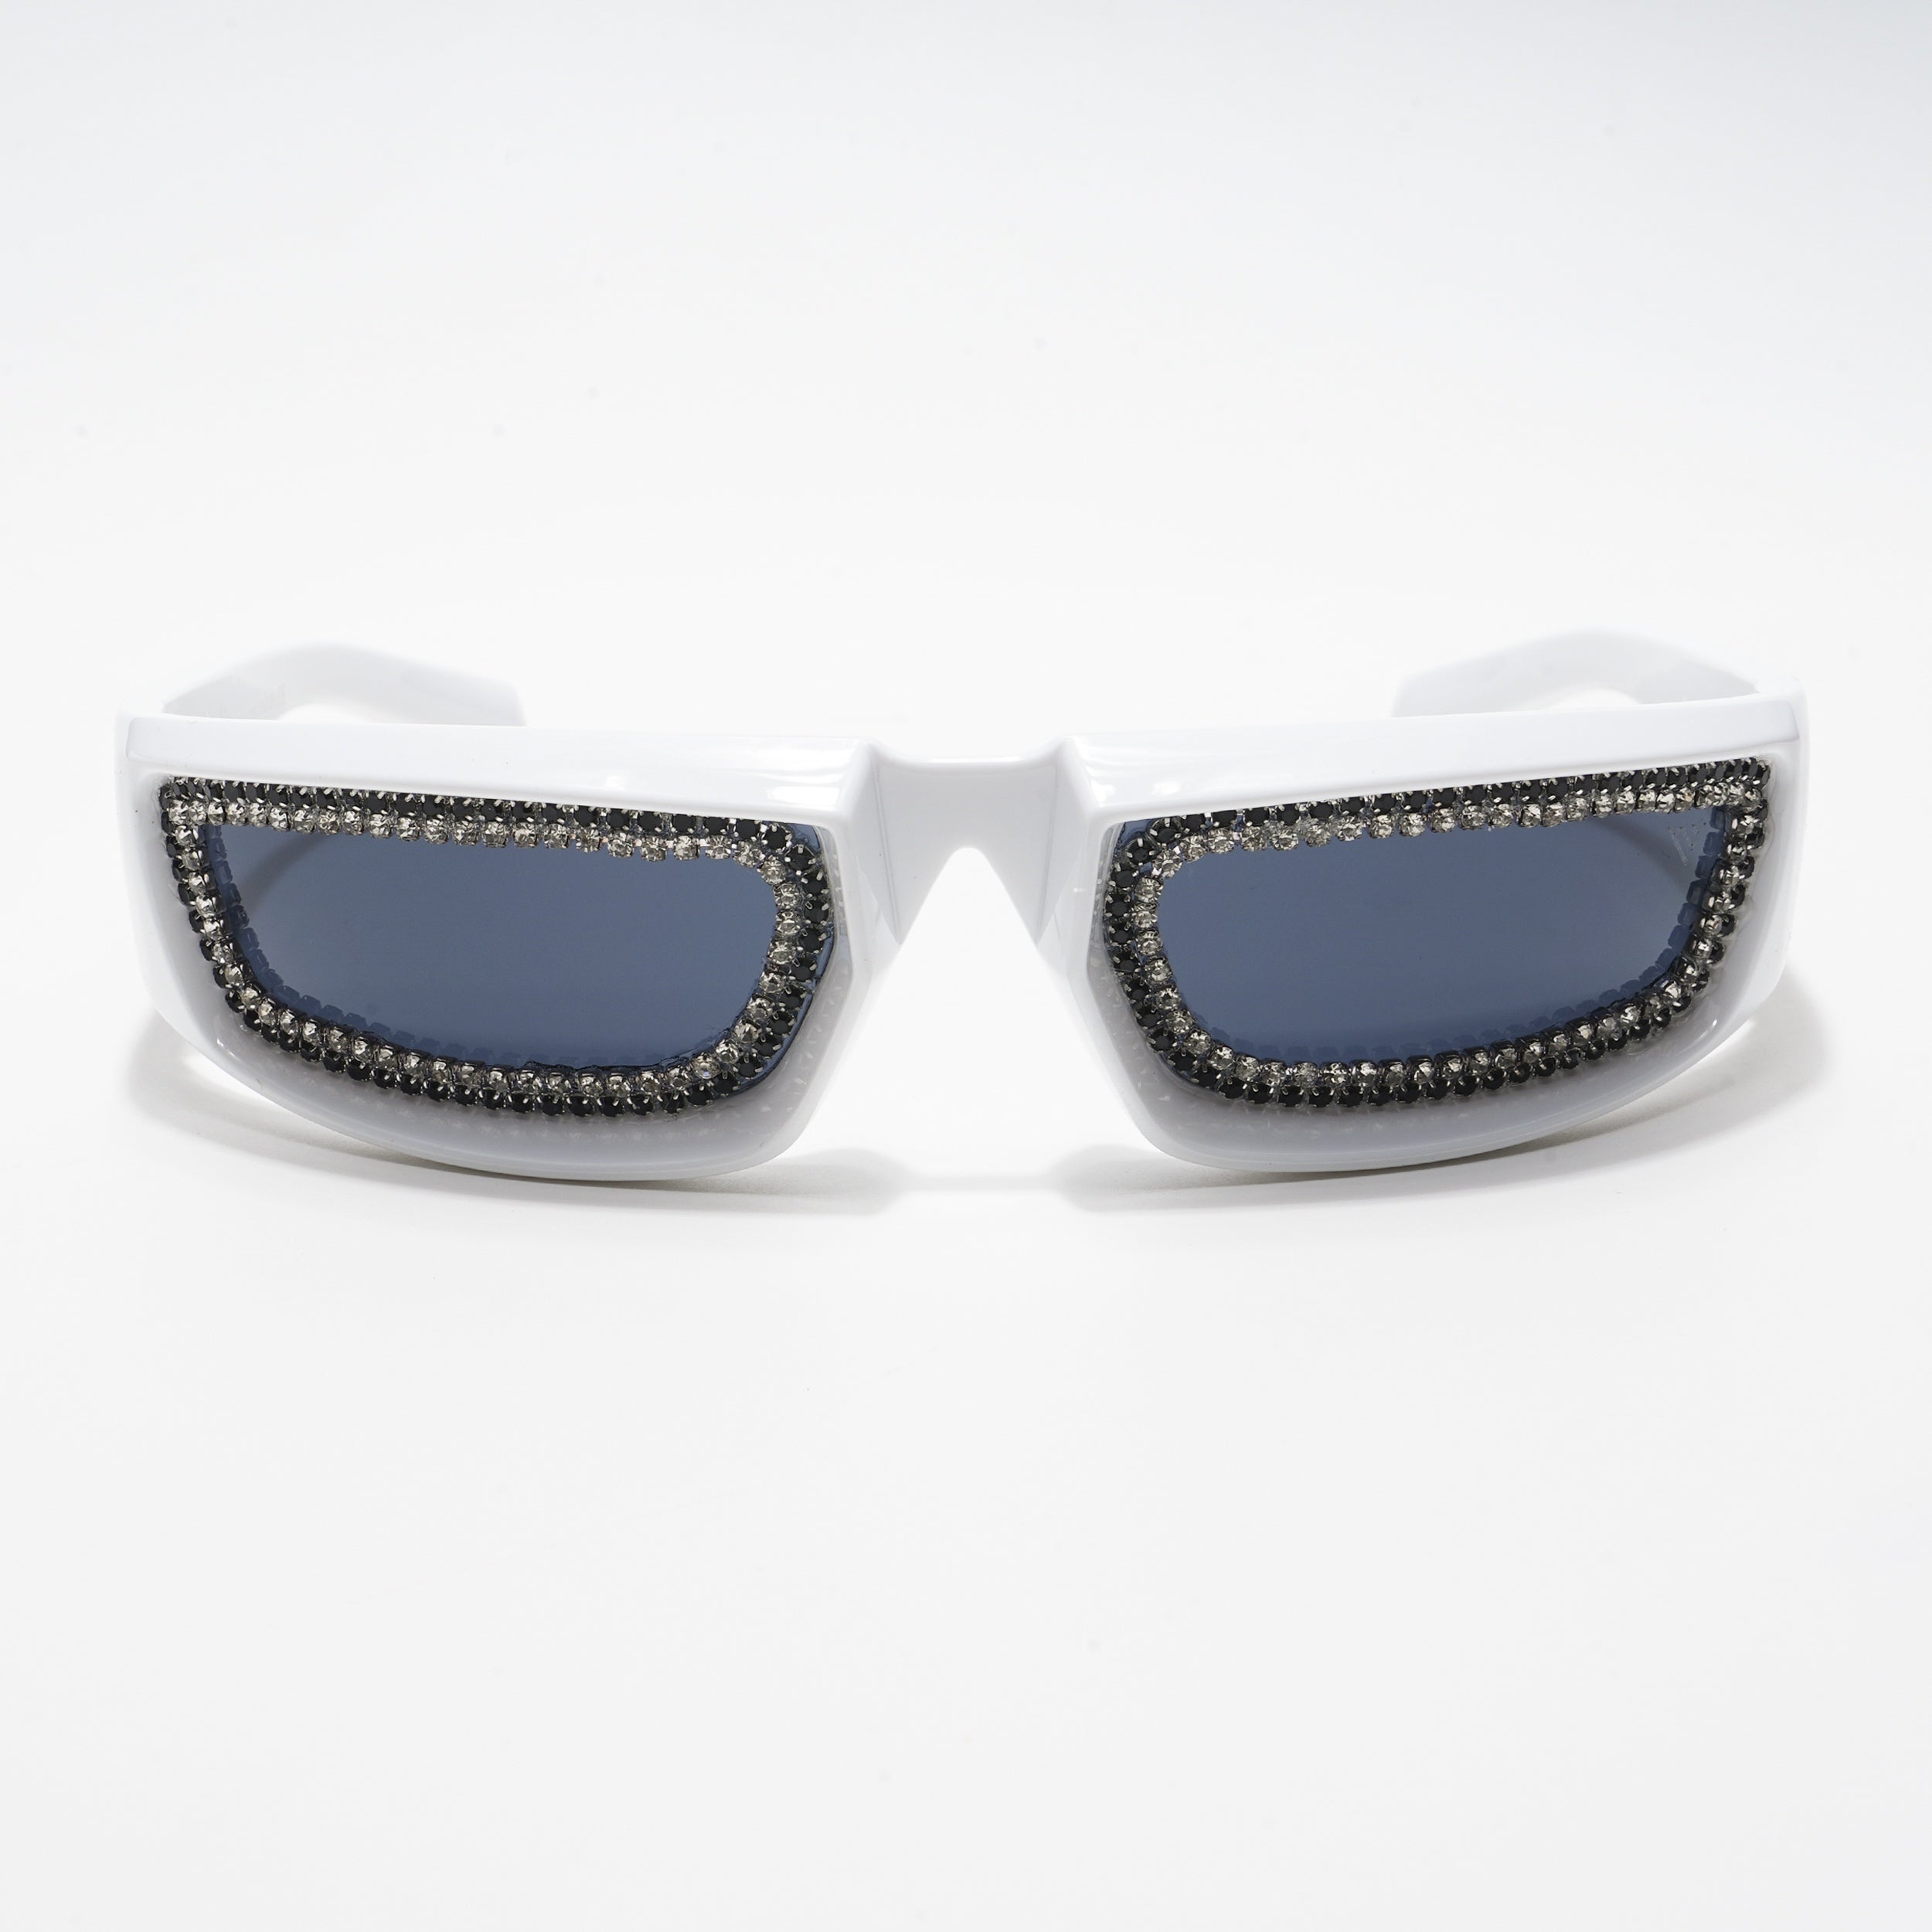 Voyage Black Wrap-Around Sunglasses for Men & Women - MG4353